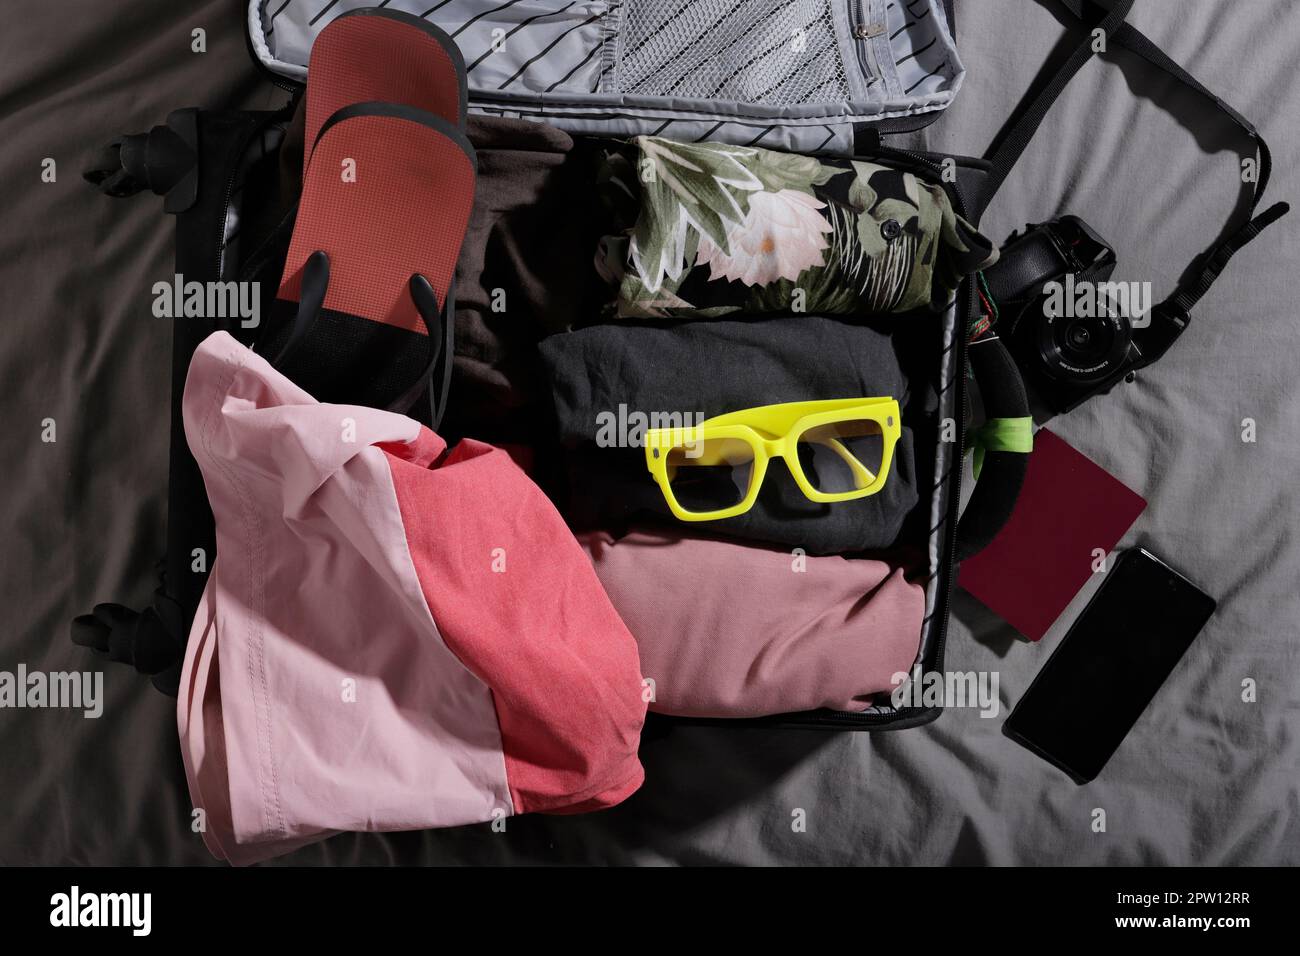 boy's suitcase with beach stuff Stock Photo